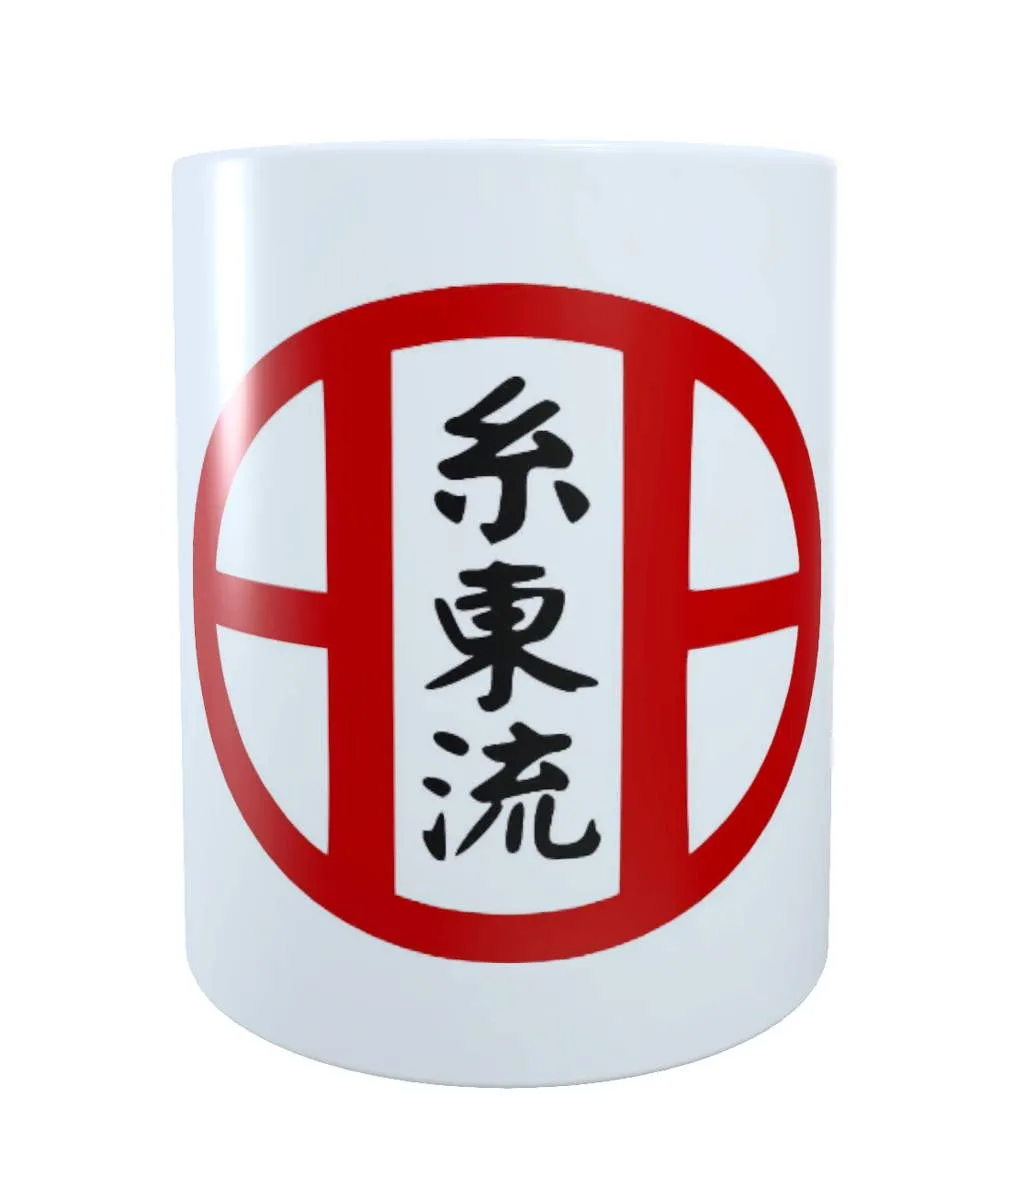 Becher - Kaffeetasse - Tasse Shito Ryu weiß